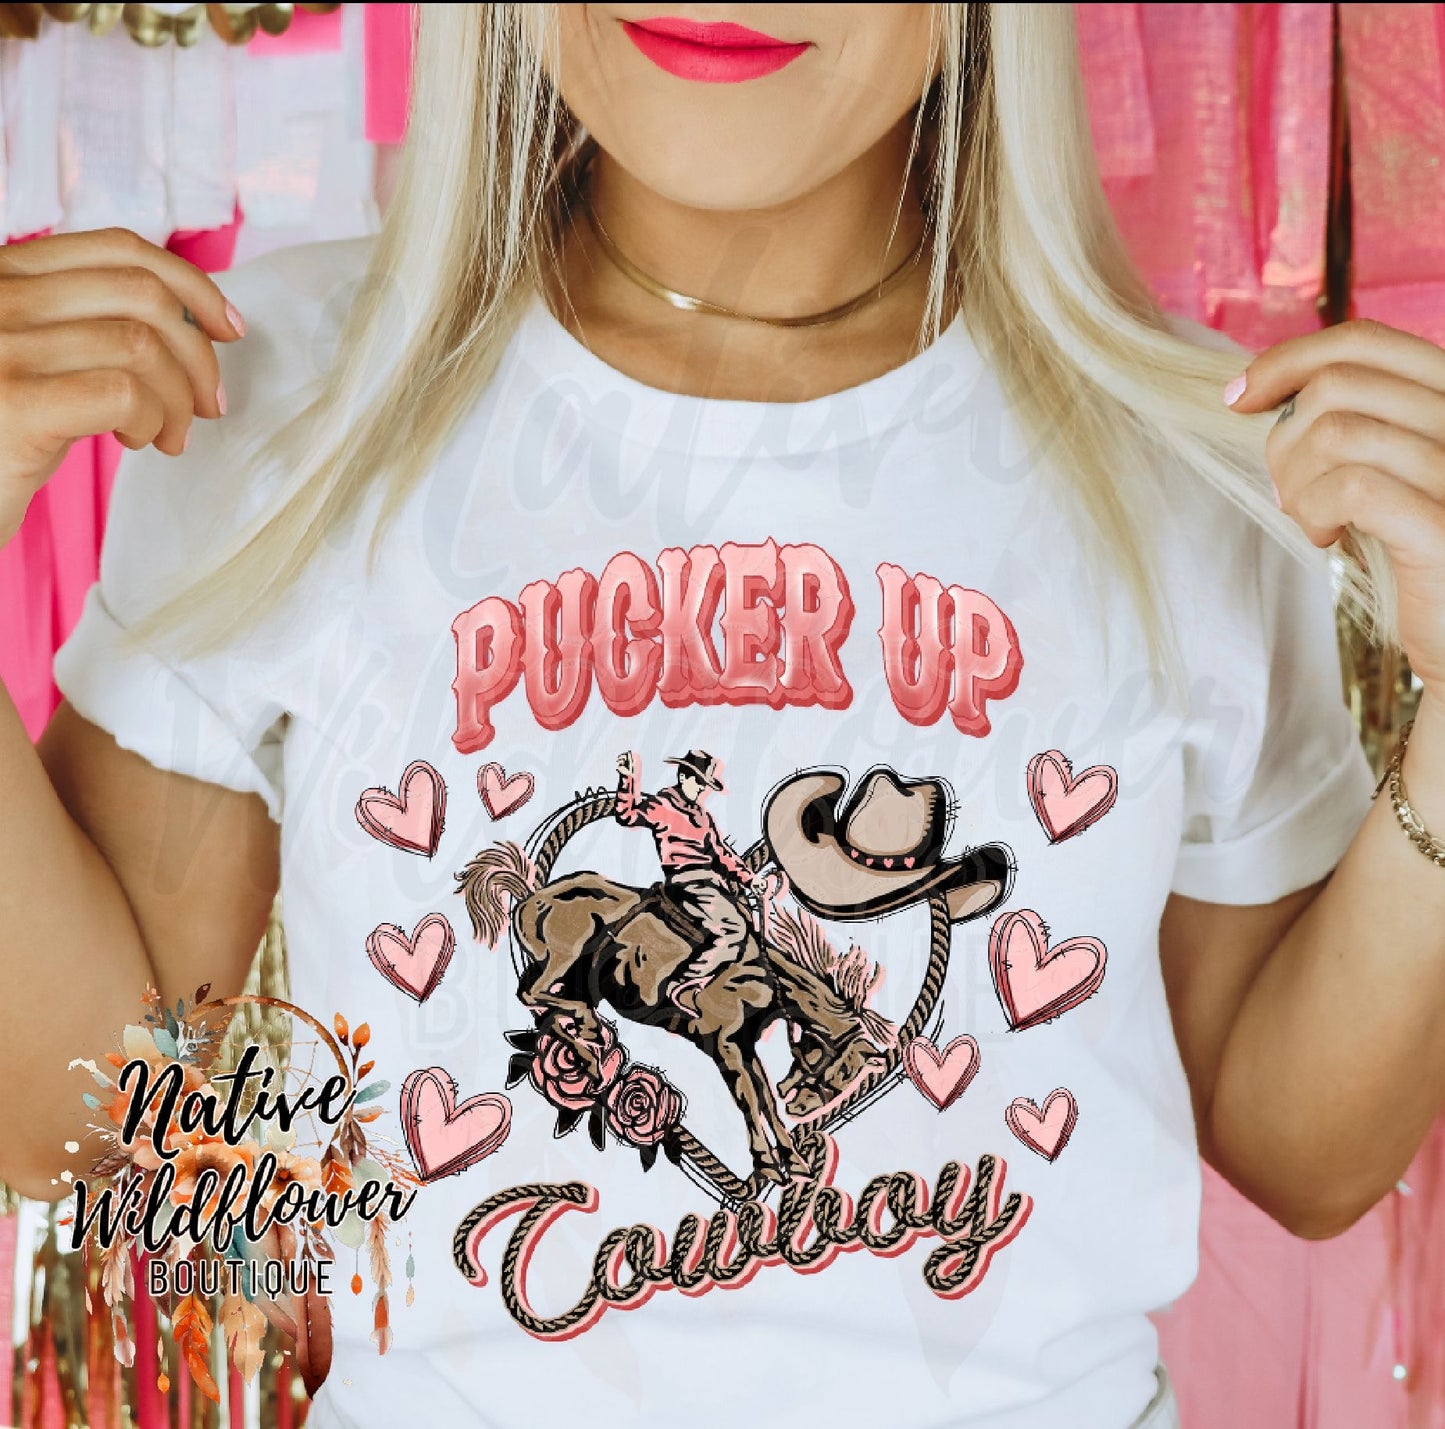 Pucker up Cowboy